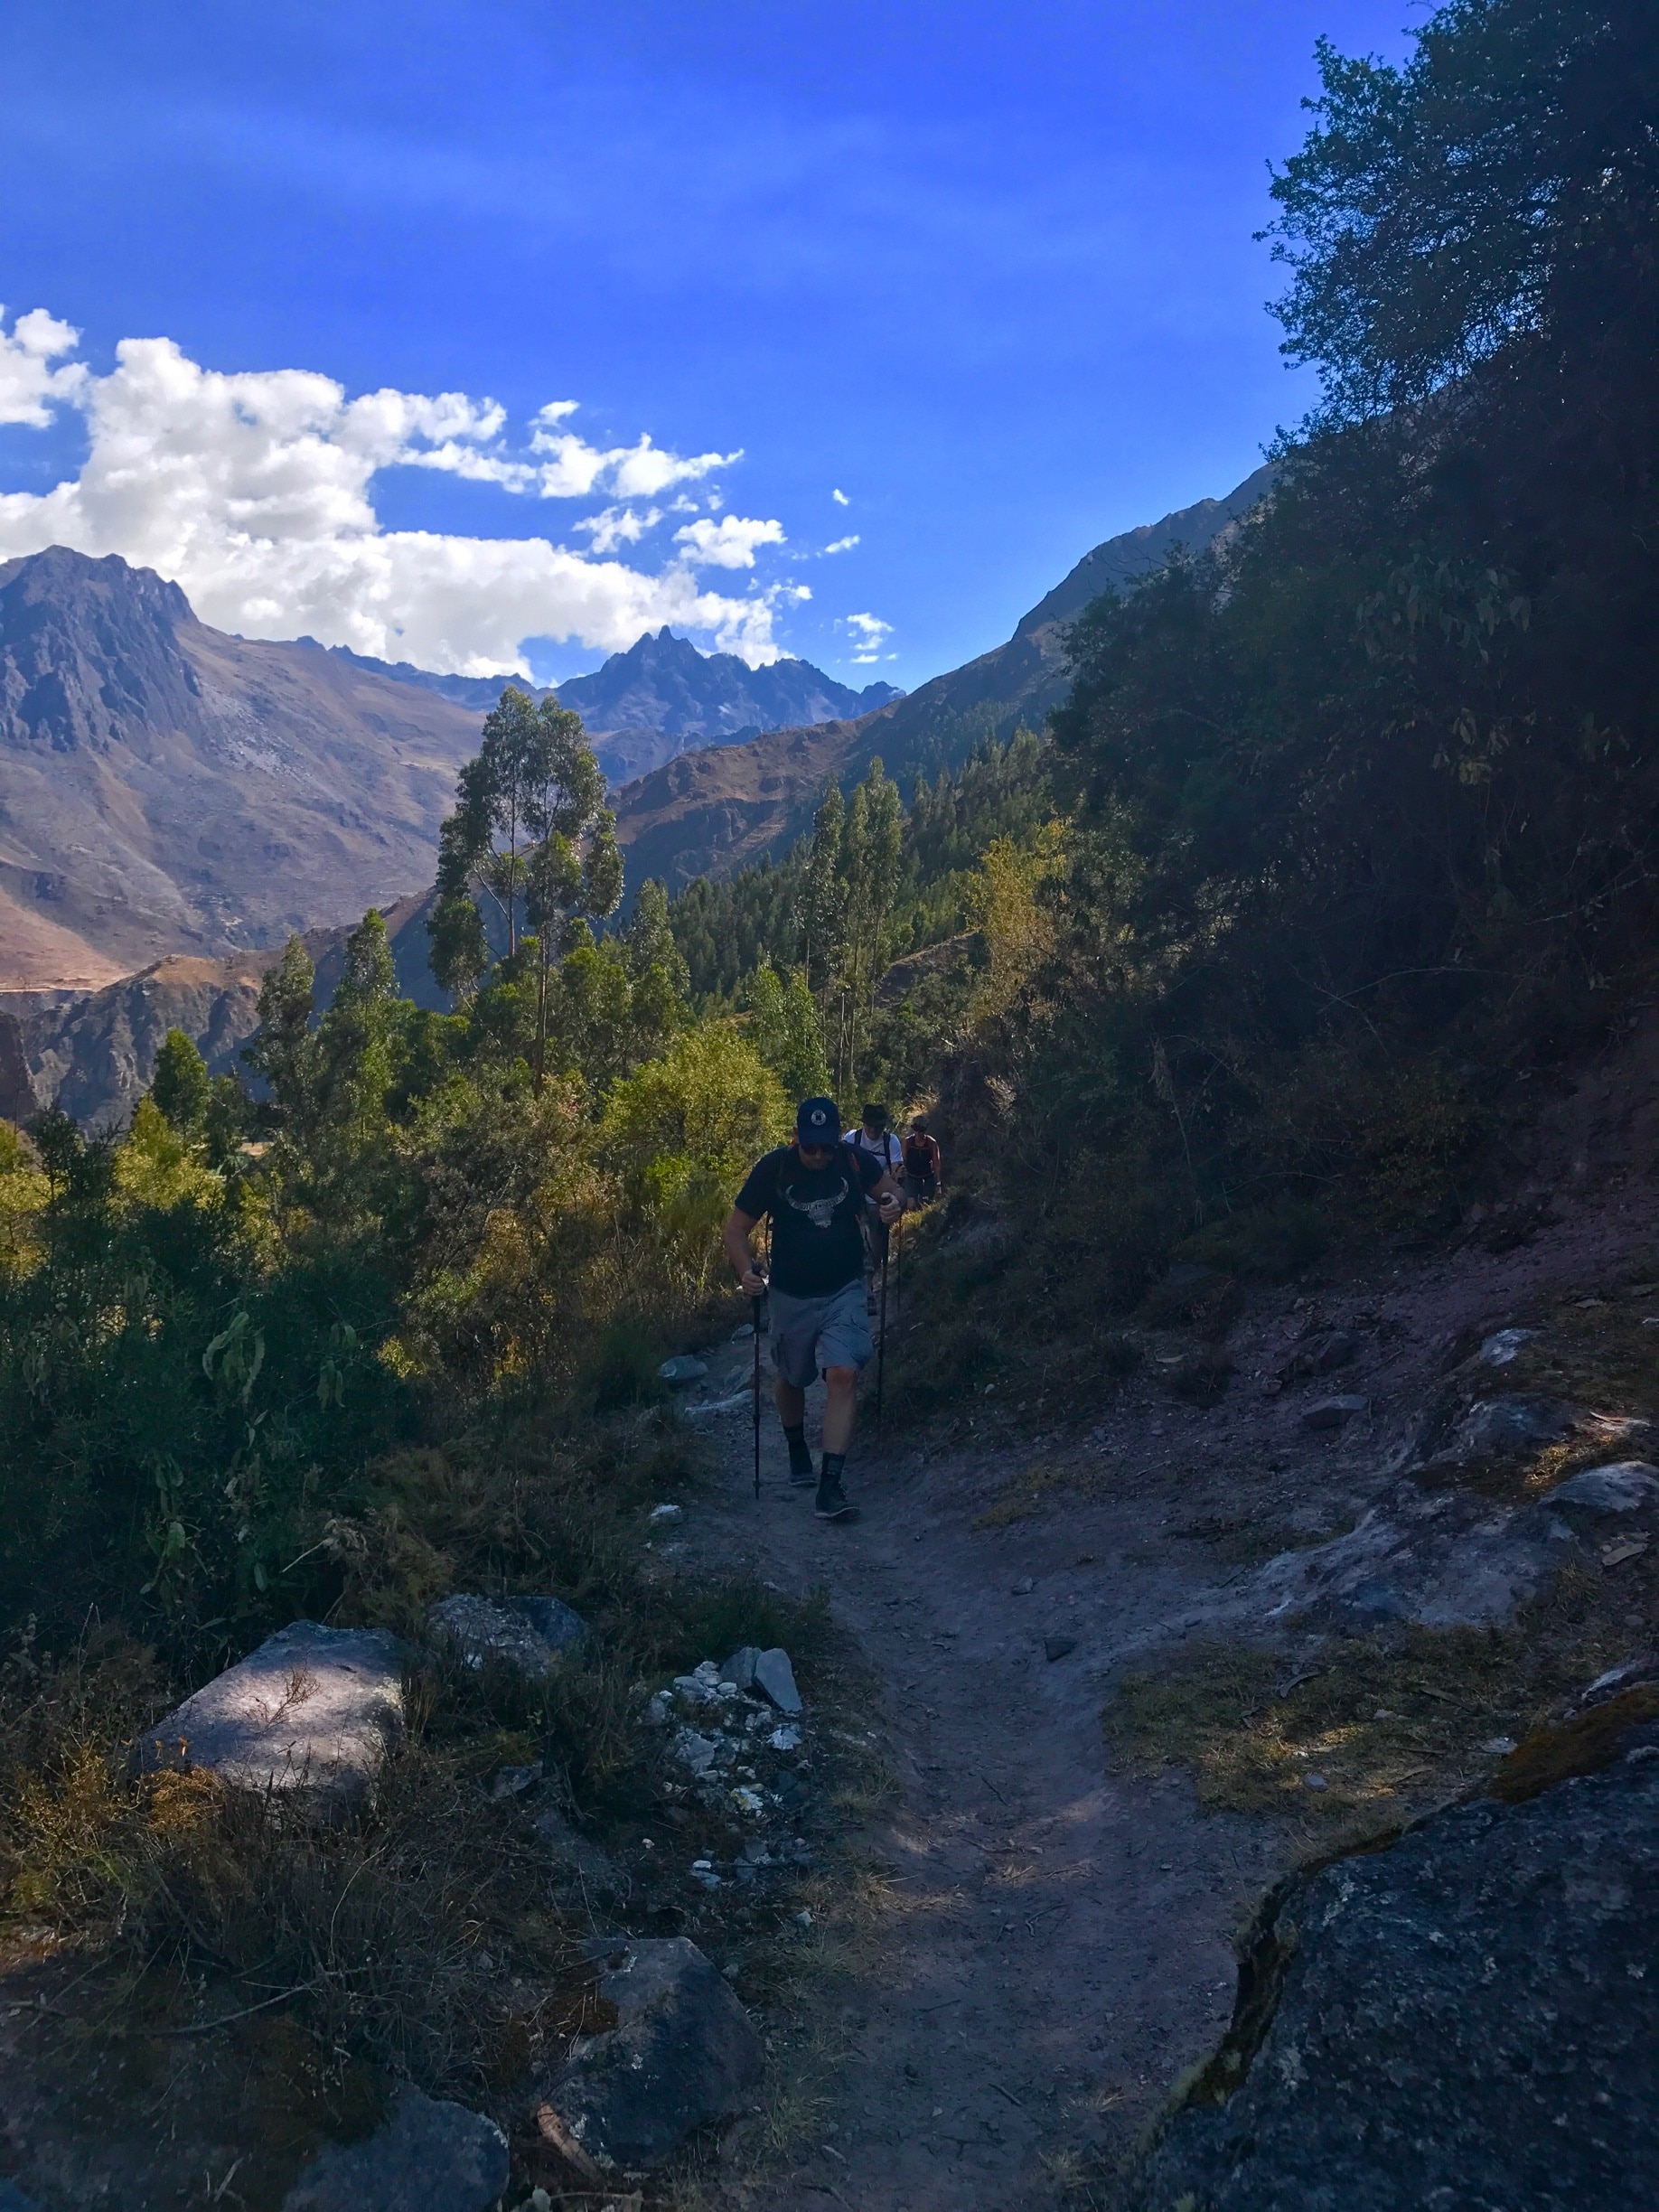 Hiking up to the Pumamarca Inca Ruins.
#TakeAHike